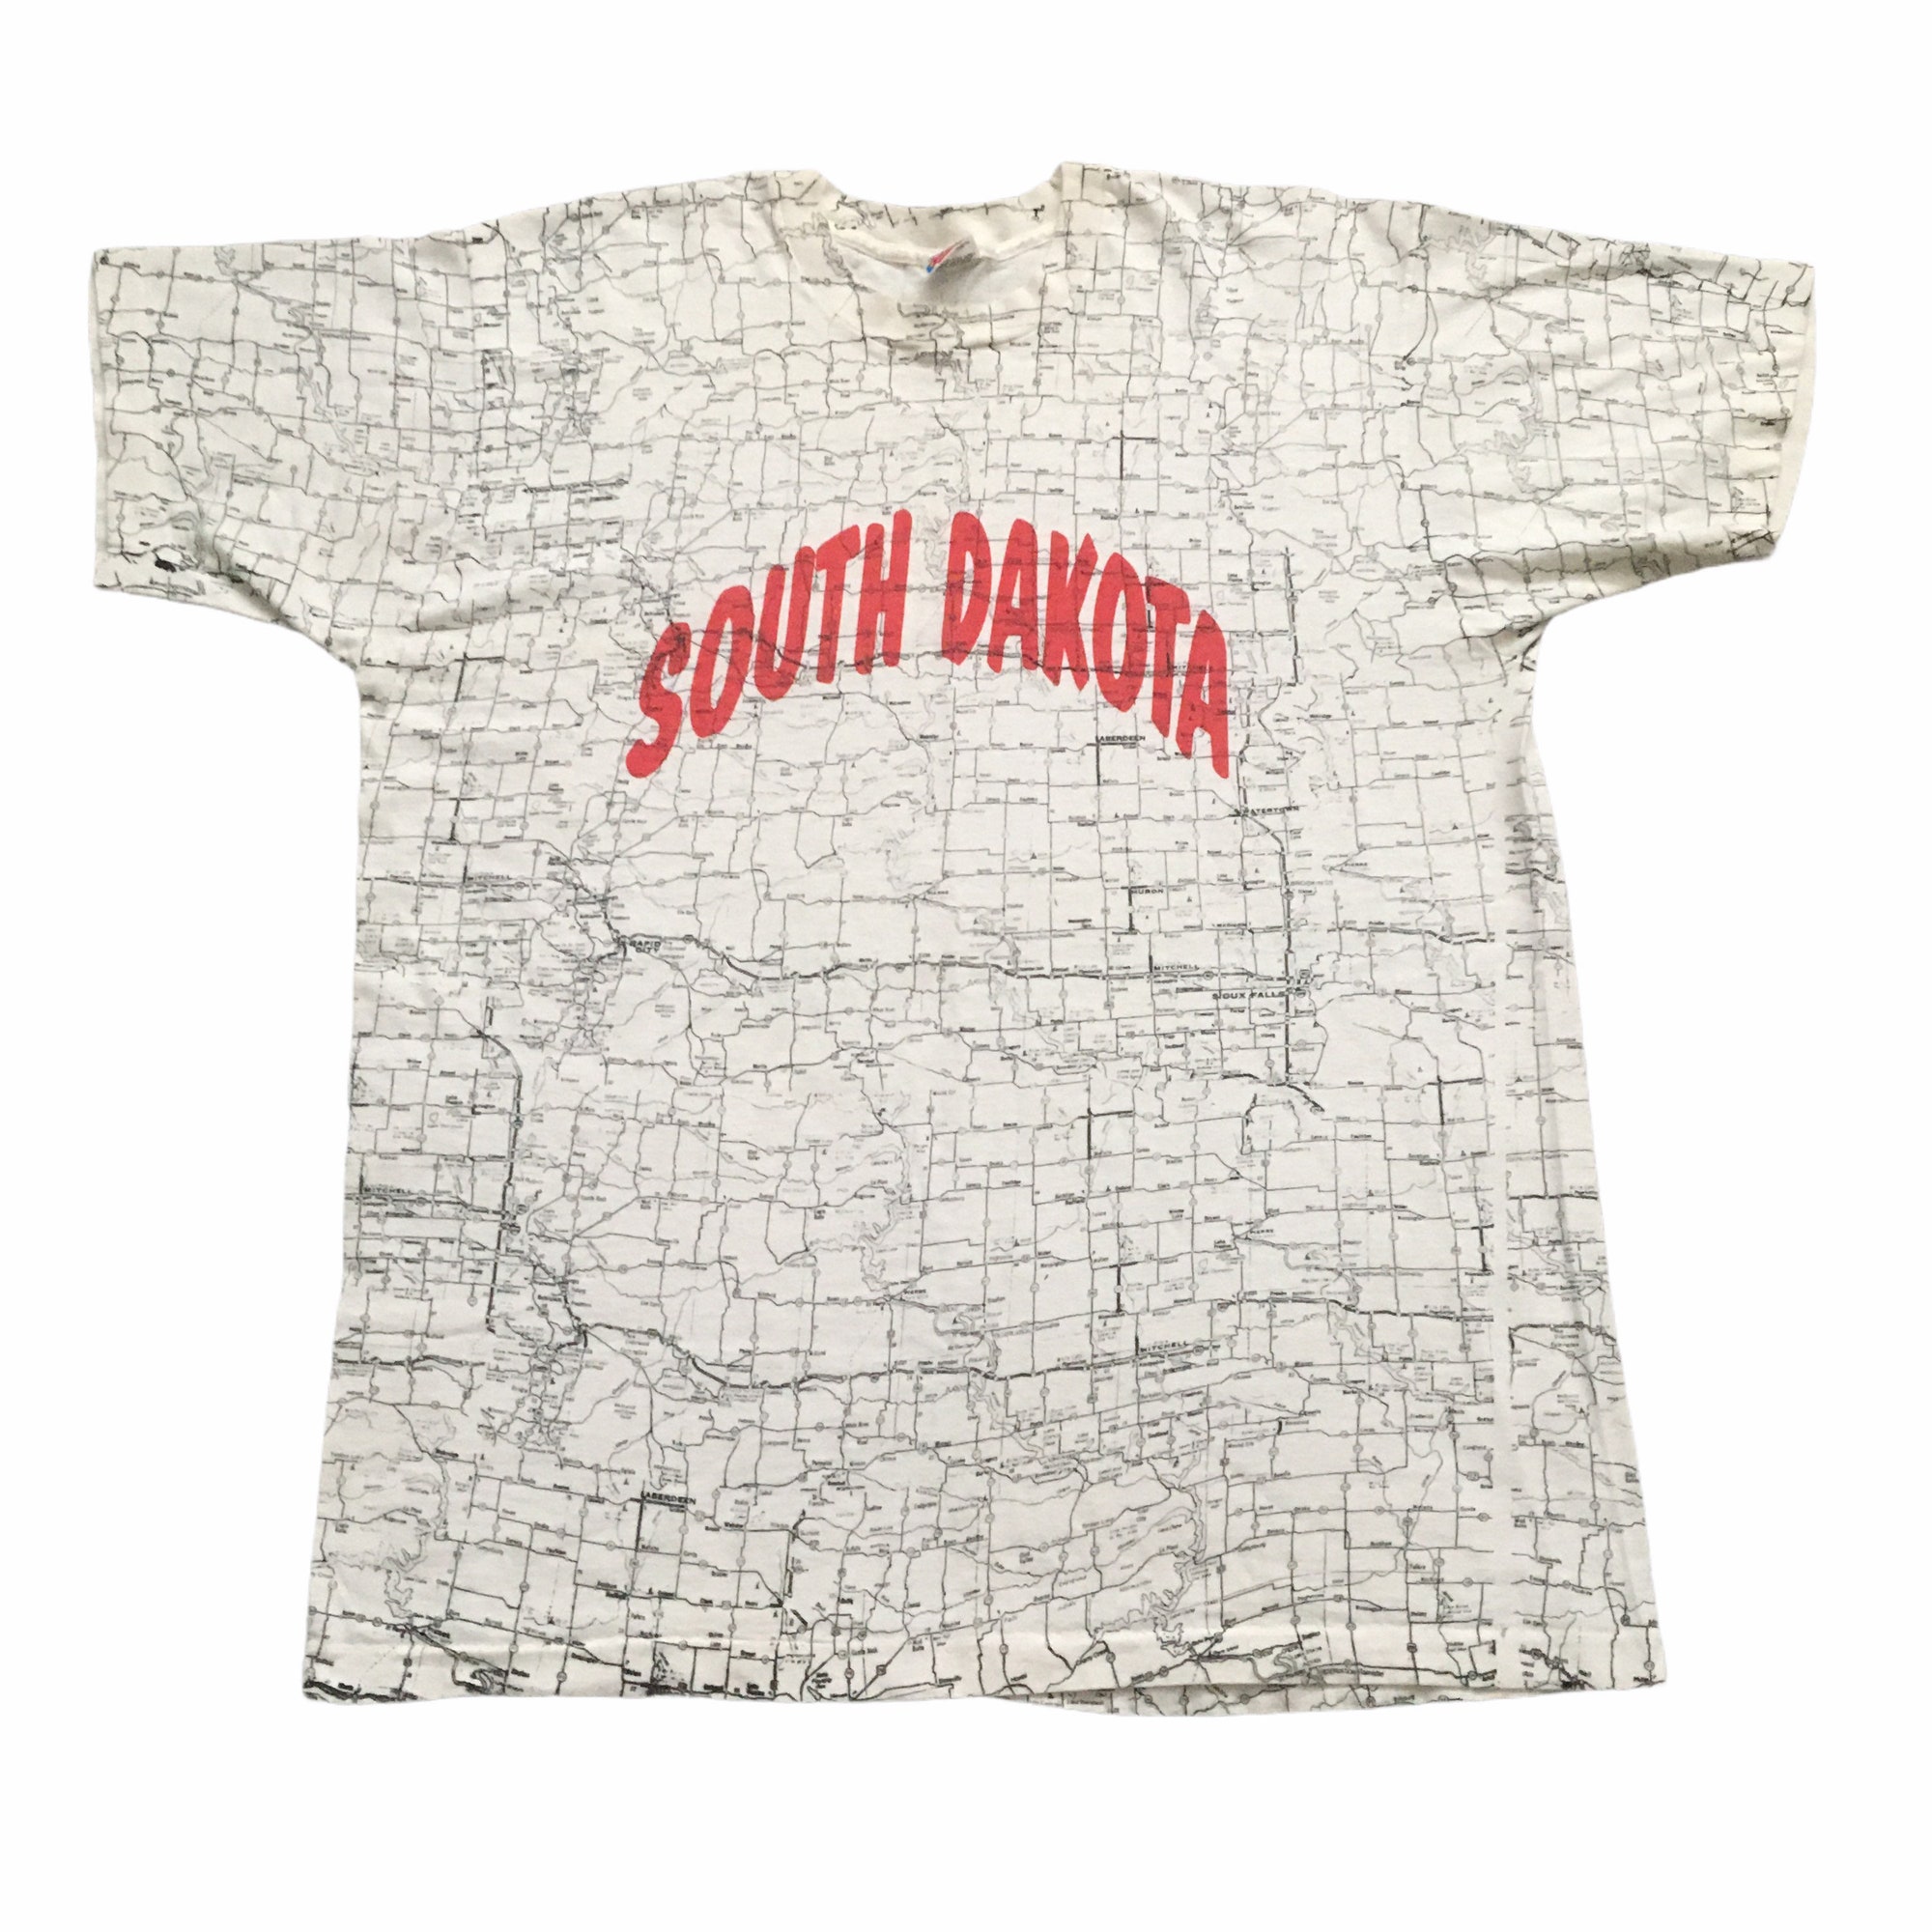 Discover Vintage 90s South Dakota Road Map 3D T-Shirt Souvenir, Black Hills, Badlands National Park